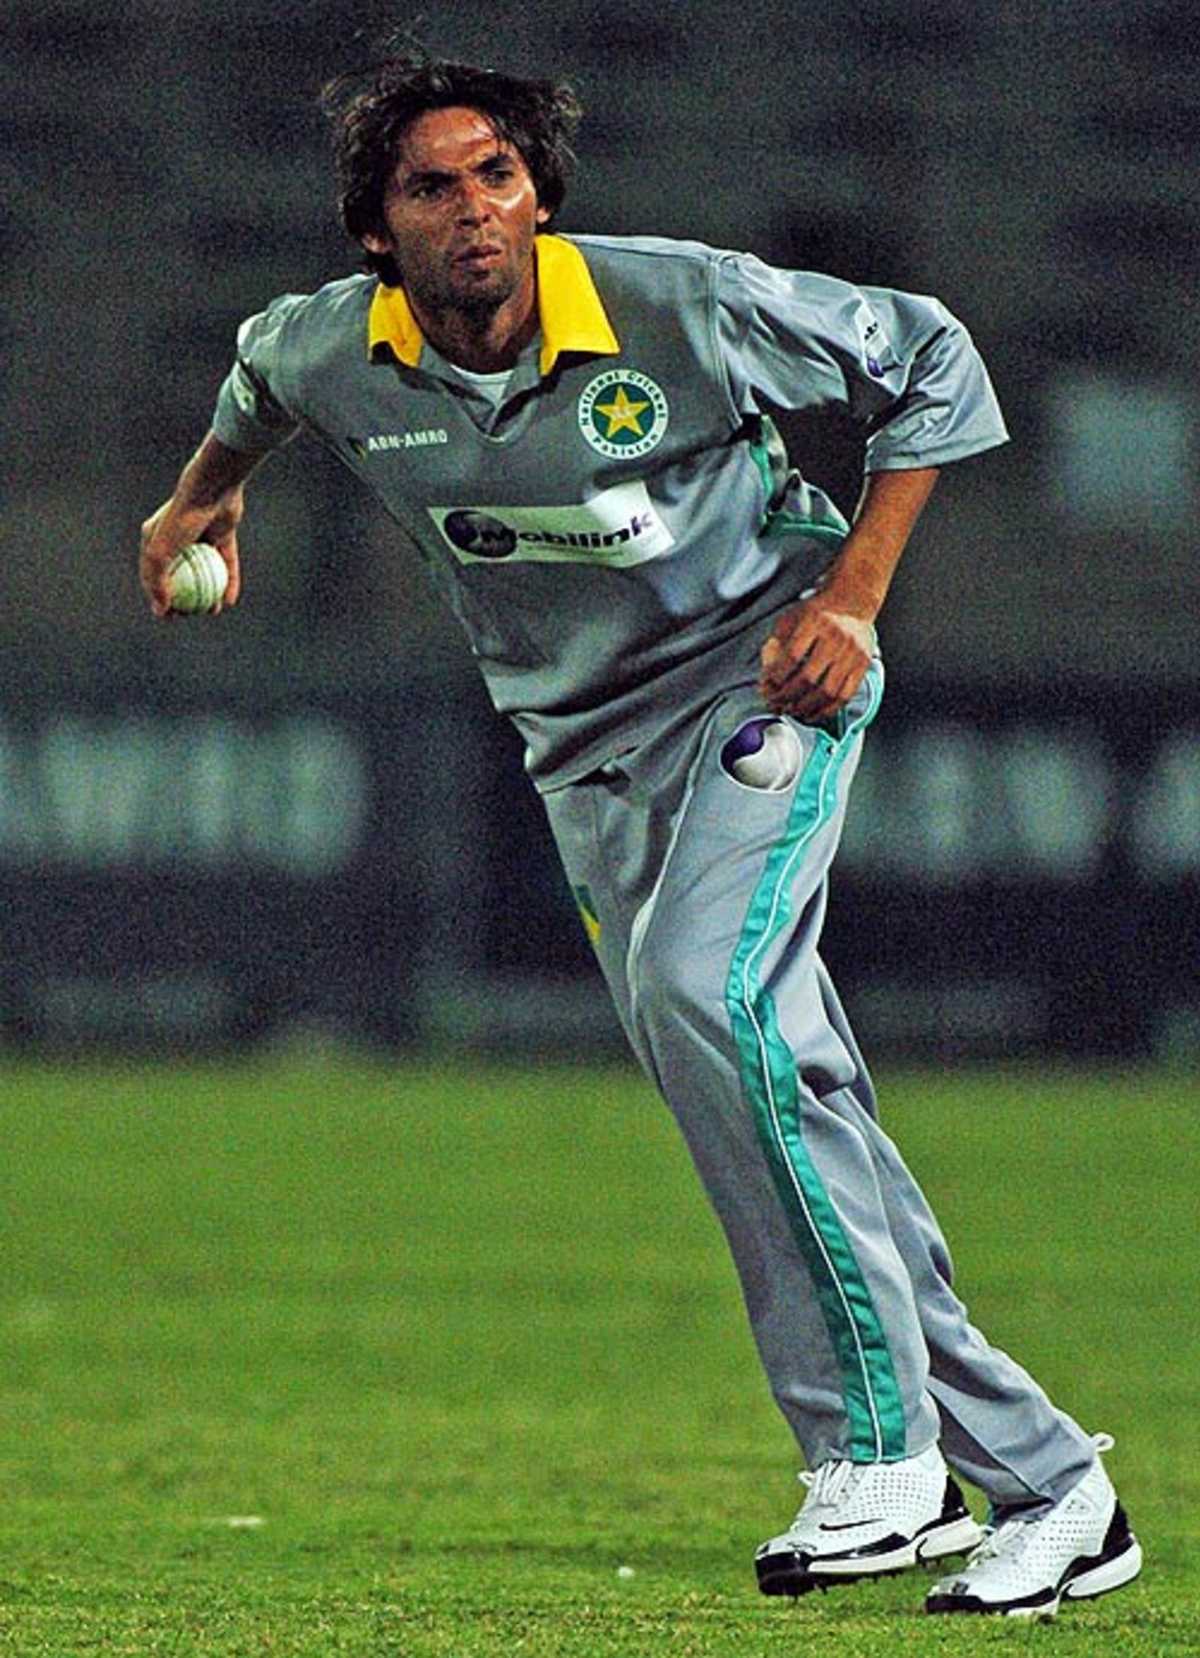 Mohammad Asif fields off his own bowling , Sialkot Stallions v Karachi Zebras, Twenty20 Cup, 2nd round, December 22, 2006